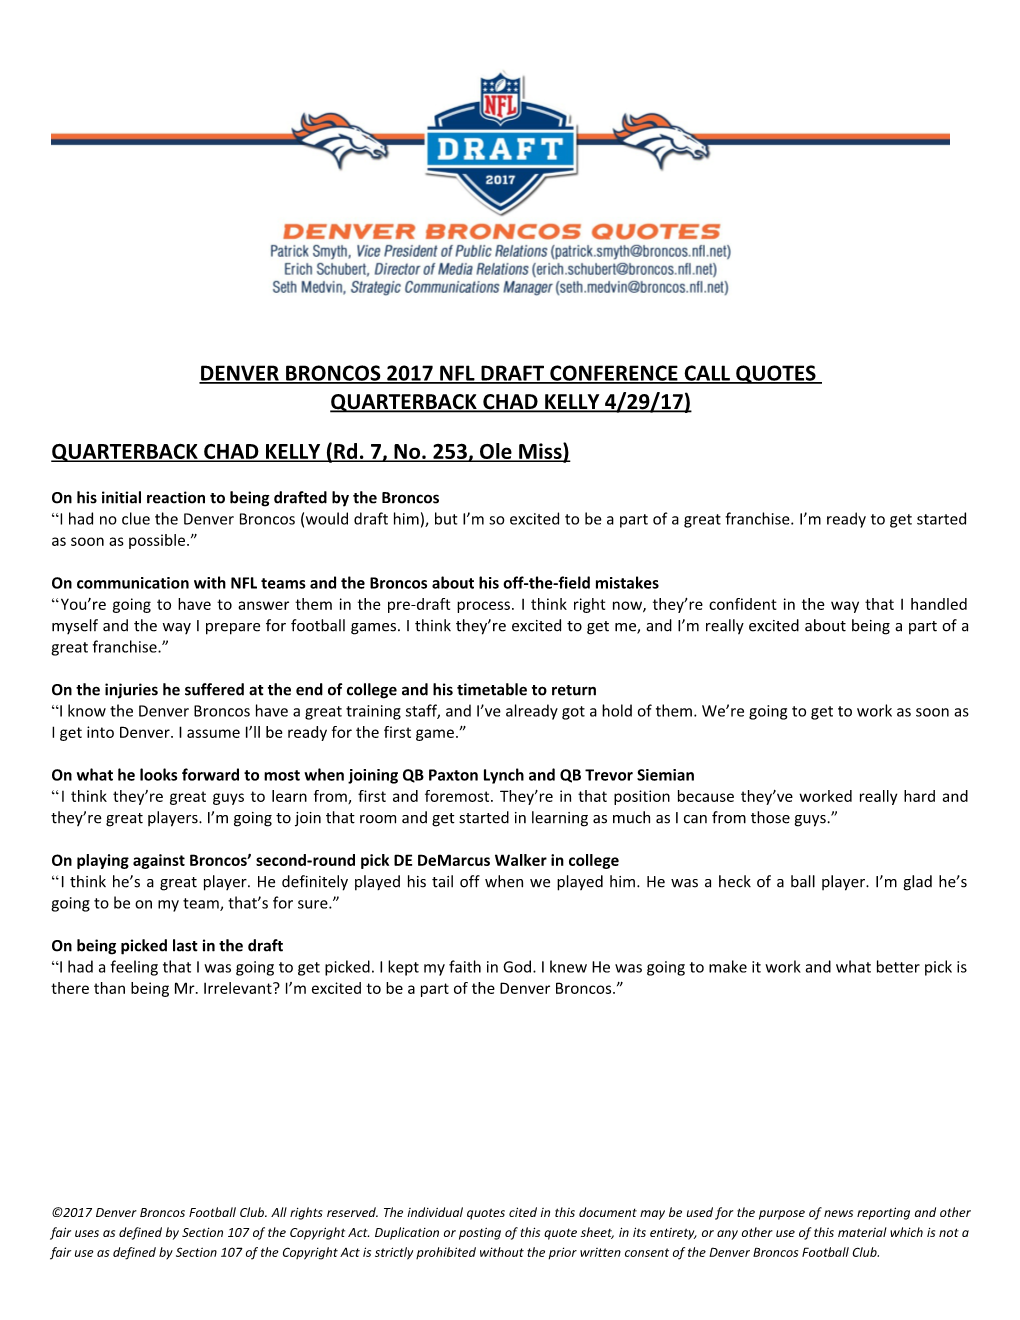 Denver Broncos 2017 Nfl Draft Conference Call Quotes